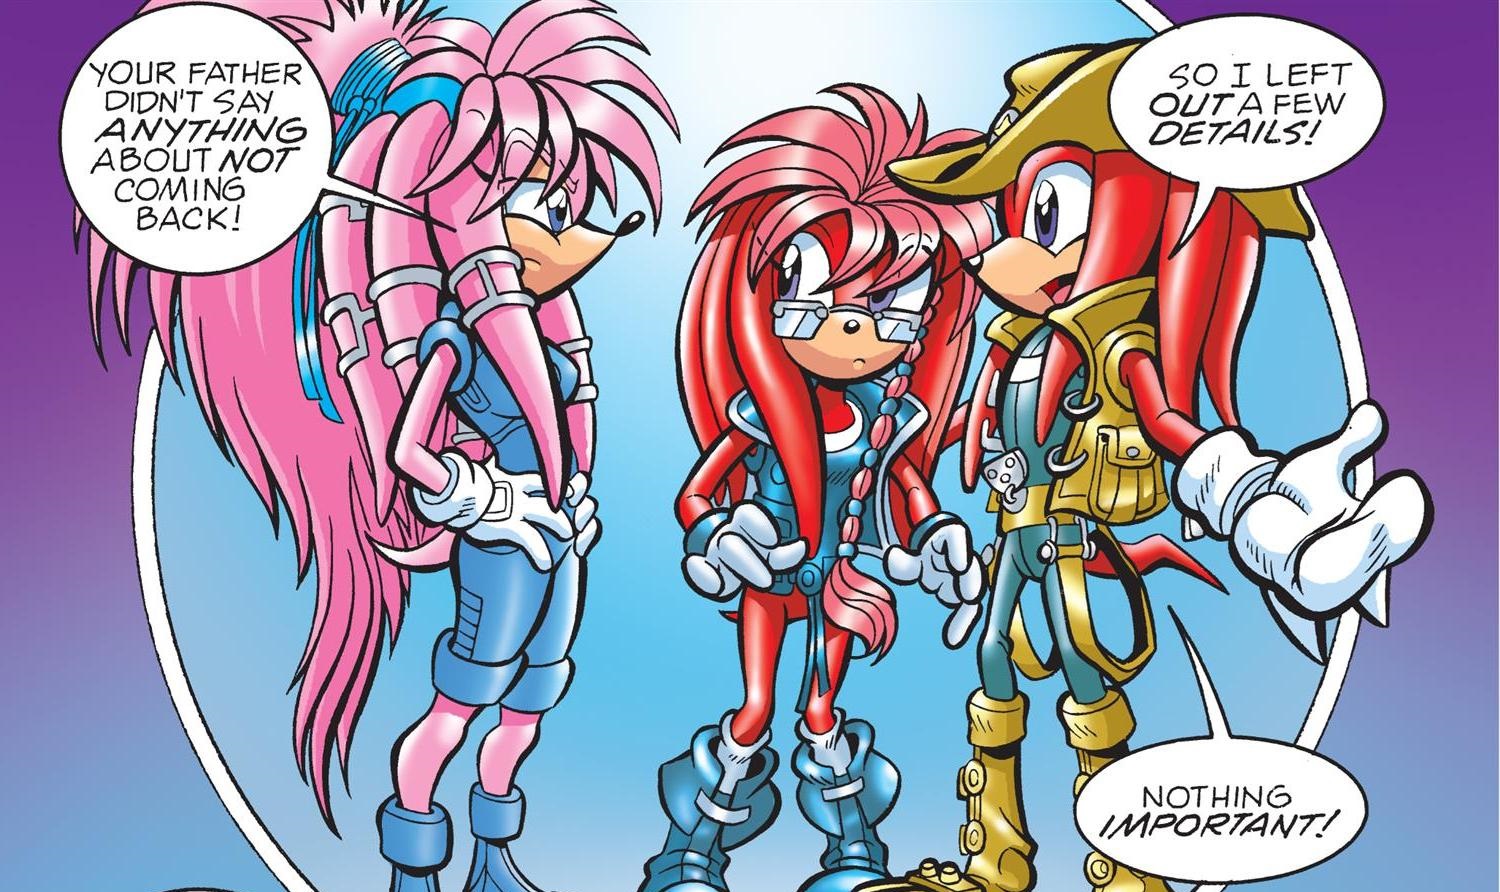 Julie-Su Origins Sonic the hedgehog comics 